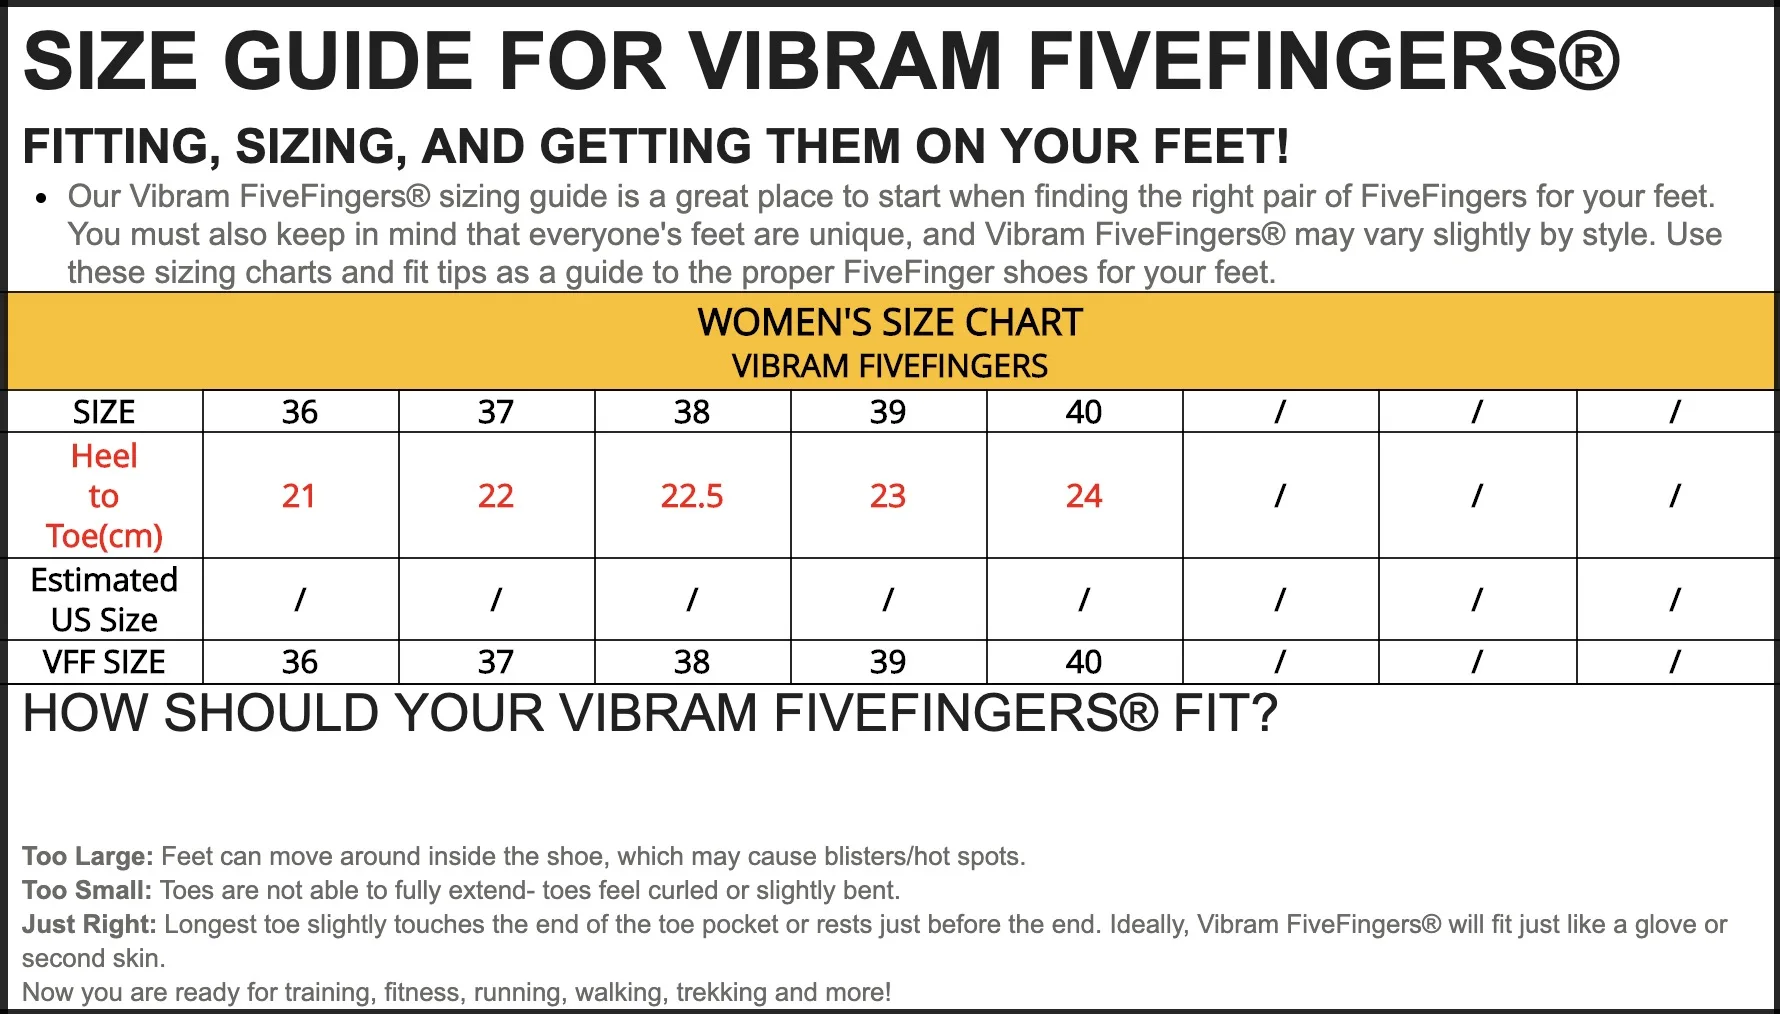 US $84.97 15% OFF|Vibram Fivefingers VI B Women's Sneakers Non slip Wear  resistant Five fingers Indoor Fitness Training Yoga Dance Pilates shoes-in  ...